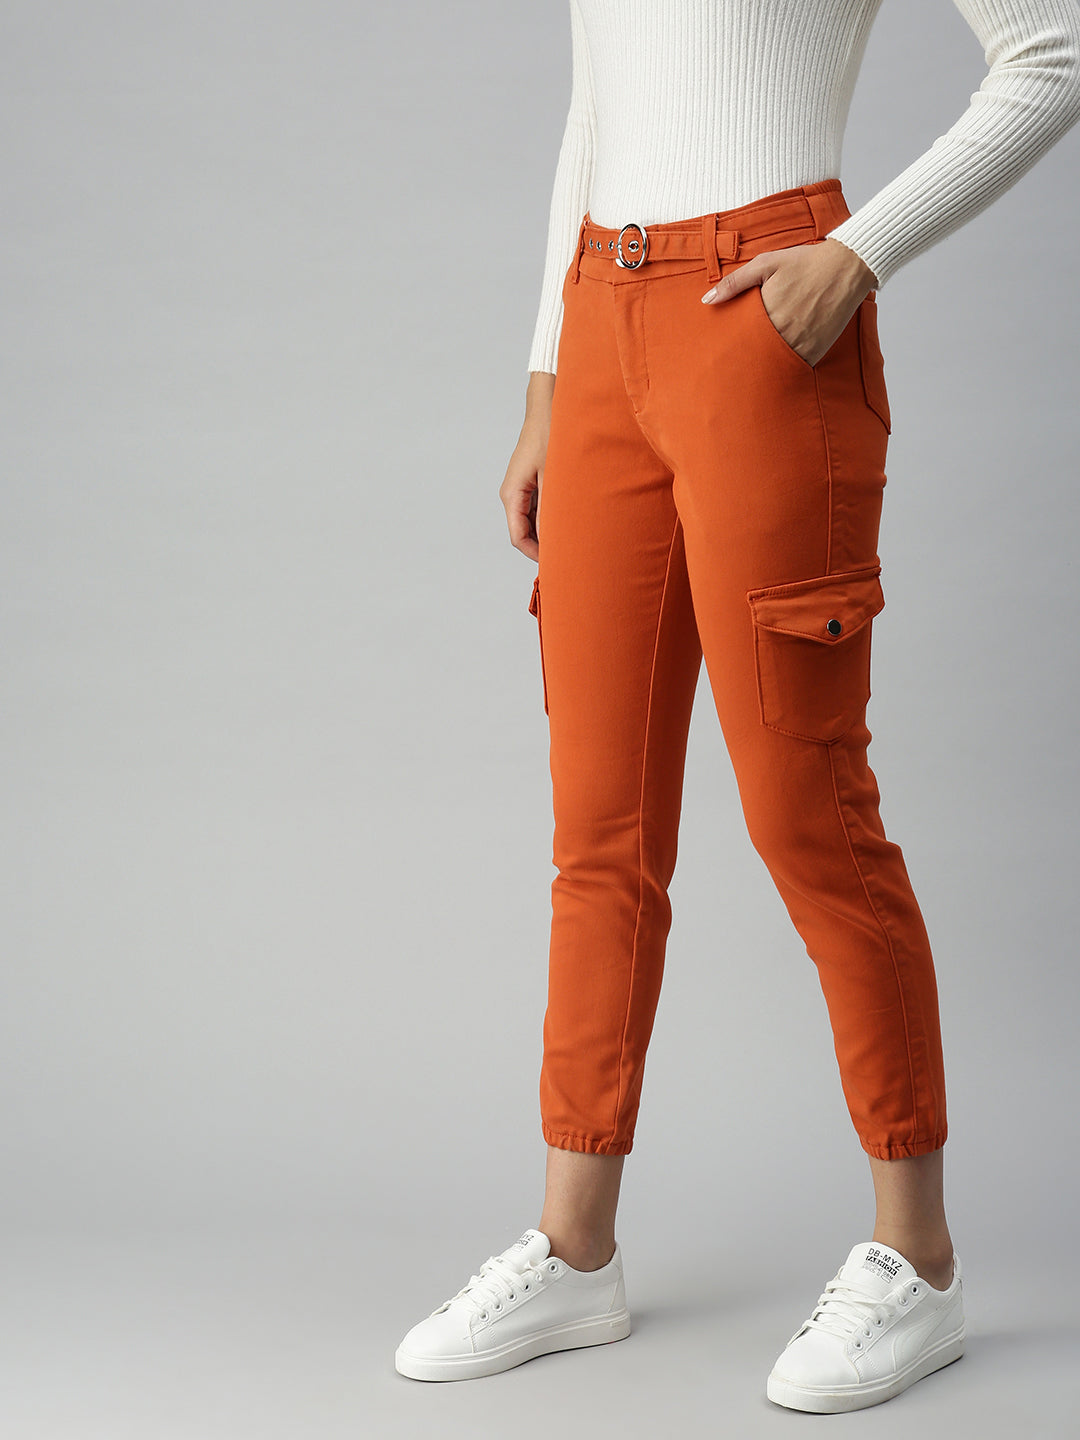 Women's Orange Solid Denim Jeans